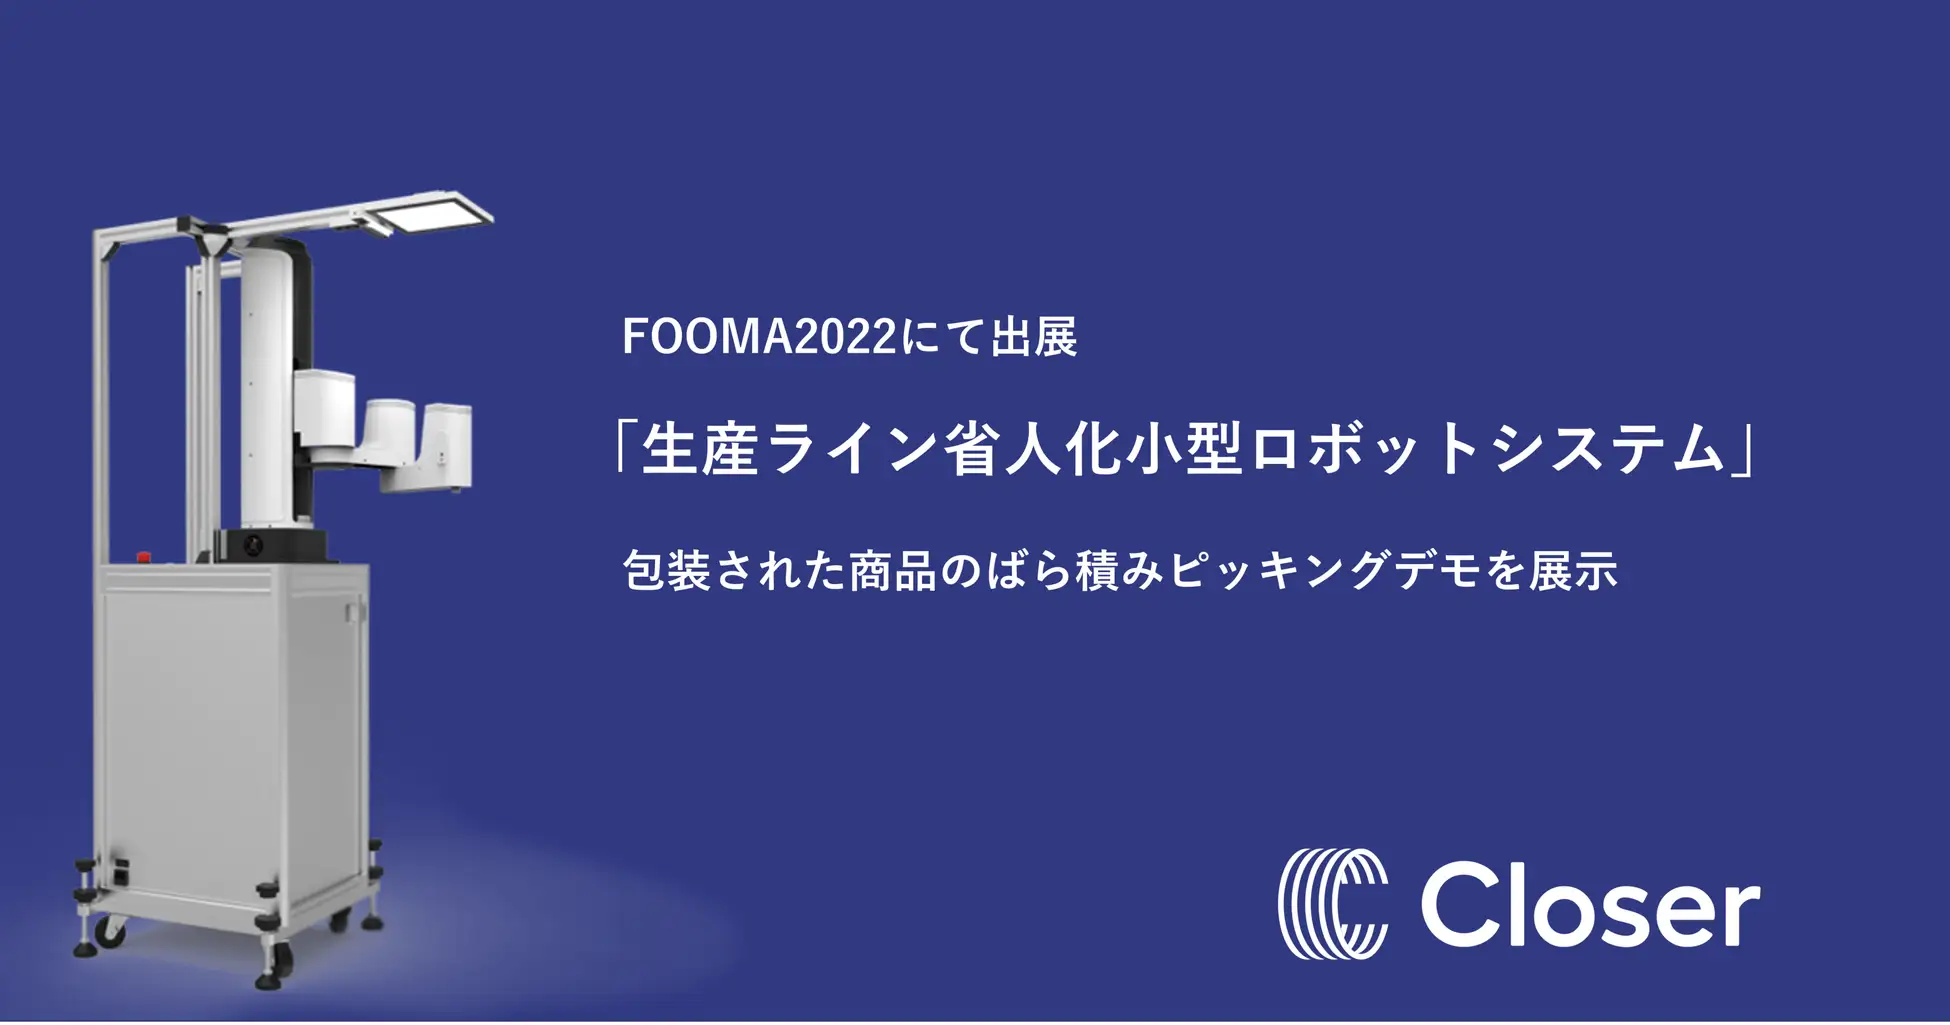 「FOOMA JAPAN 2022」に出展します